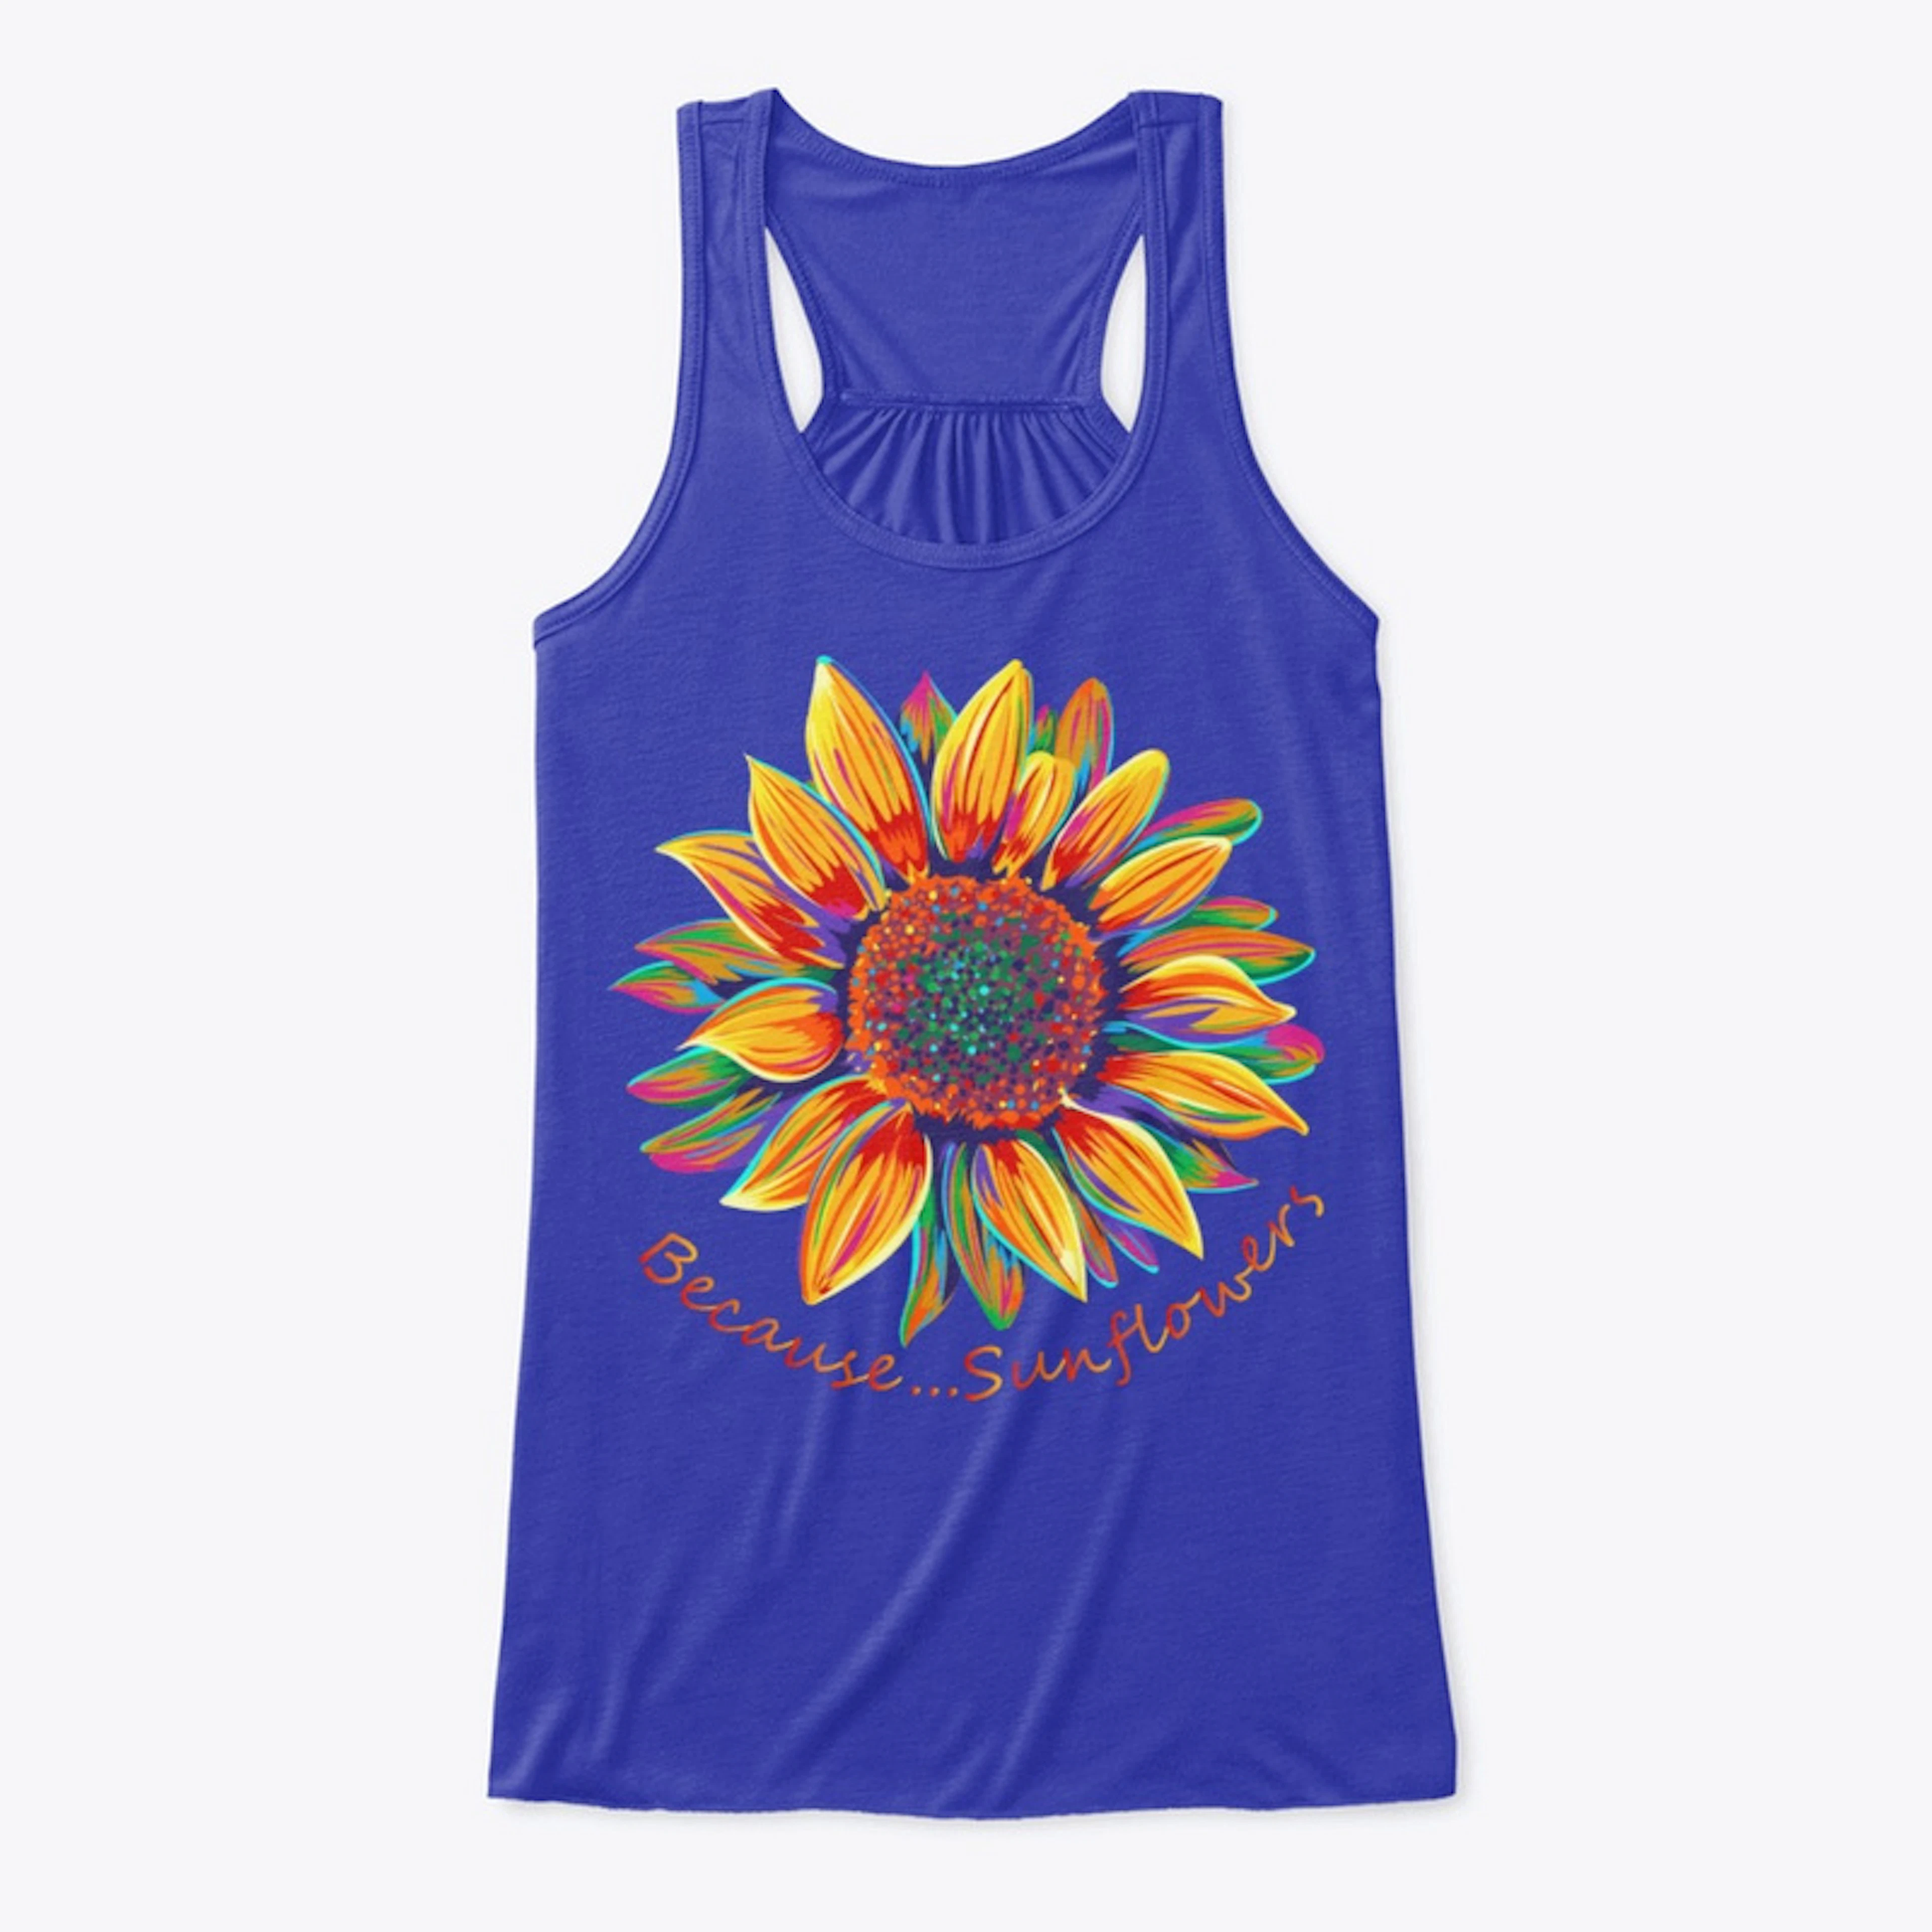 Sunflowers "Painted Sunflower" Tank Top